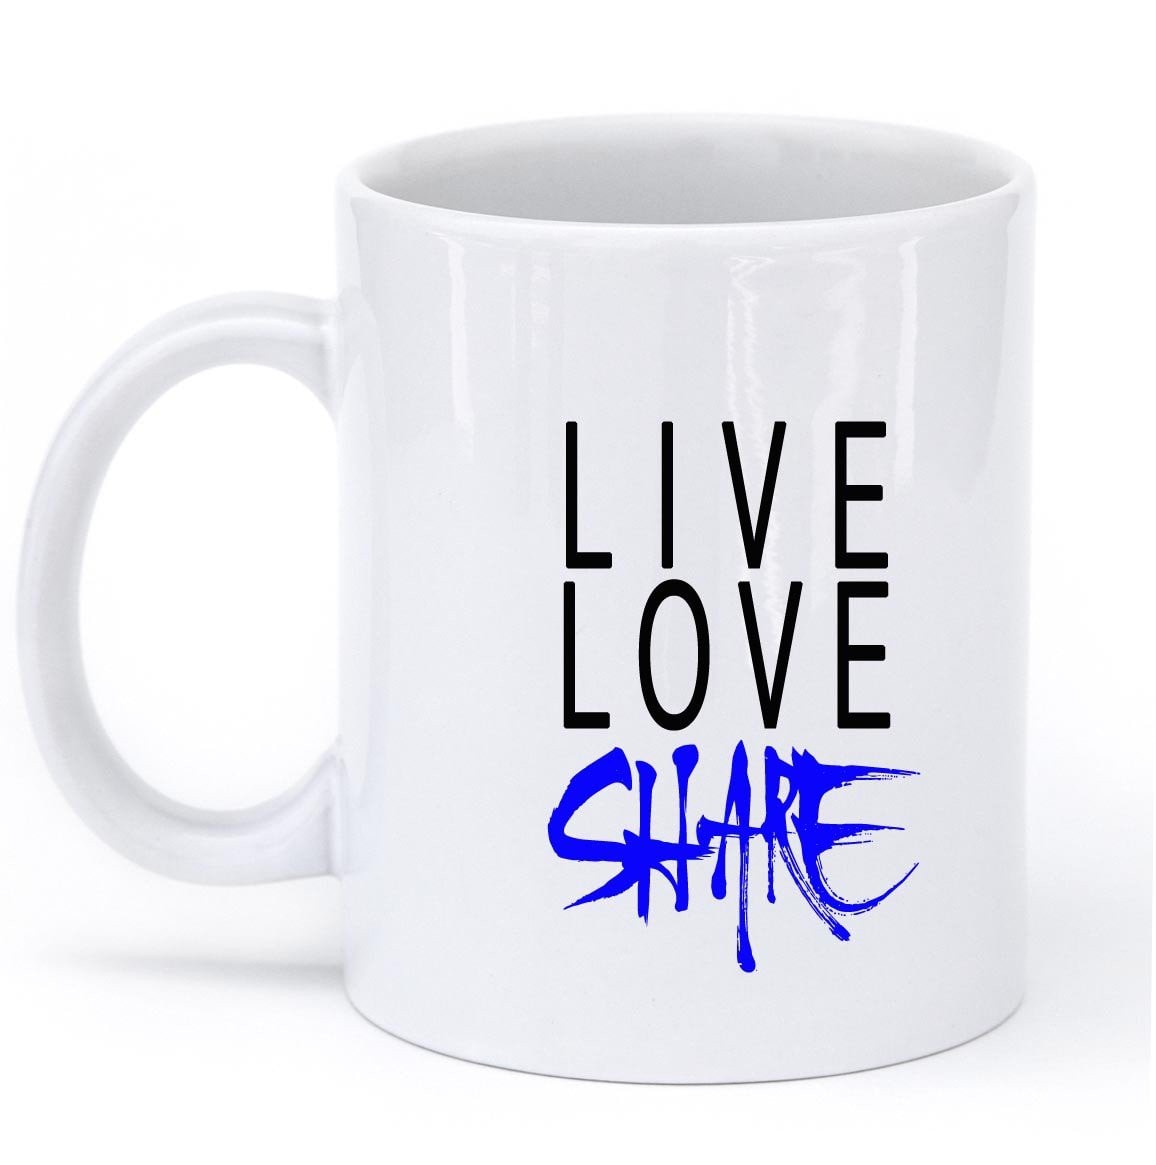 liveloveshare mug - Shirtoopia